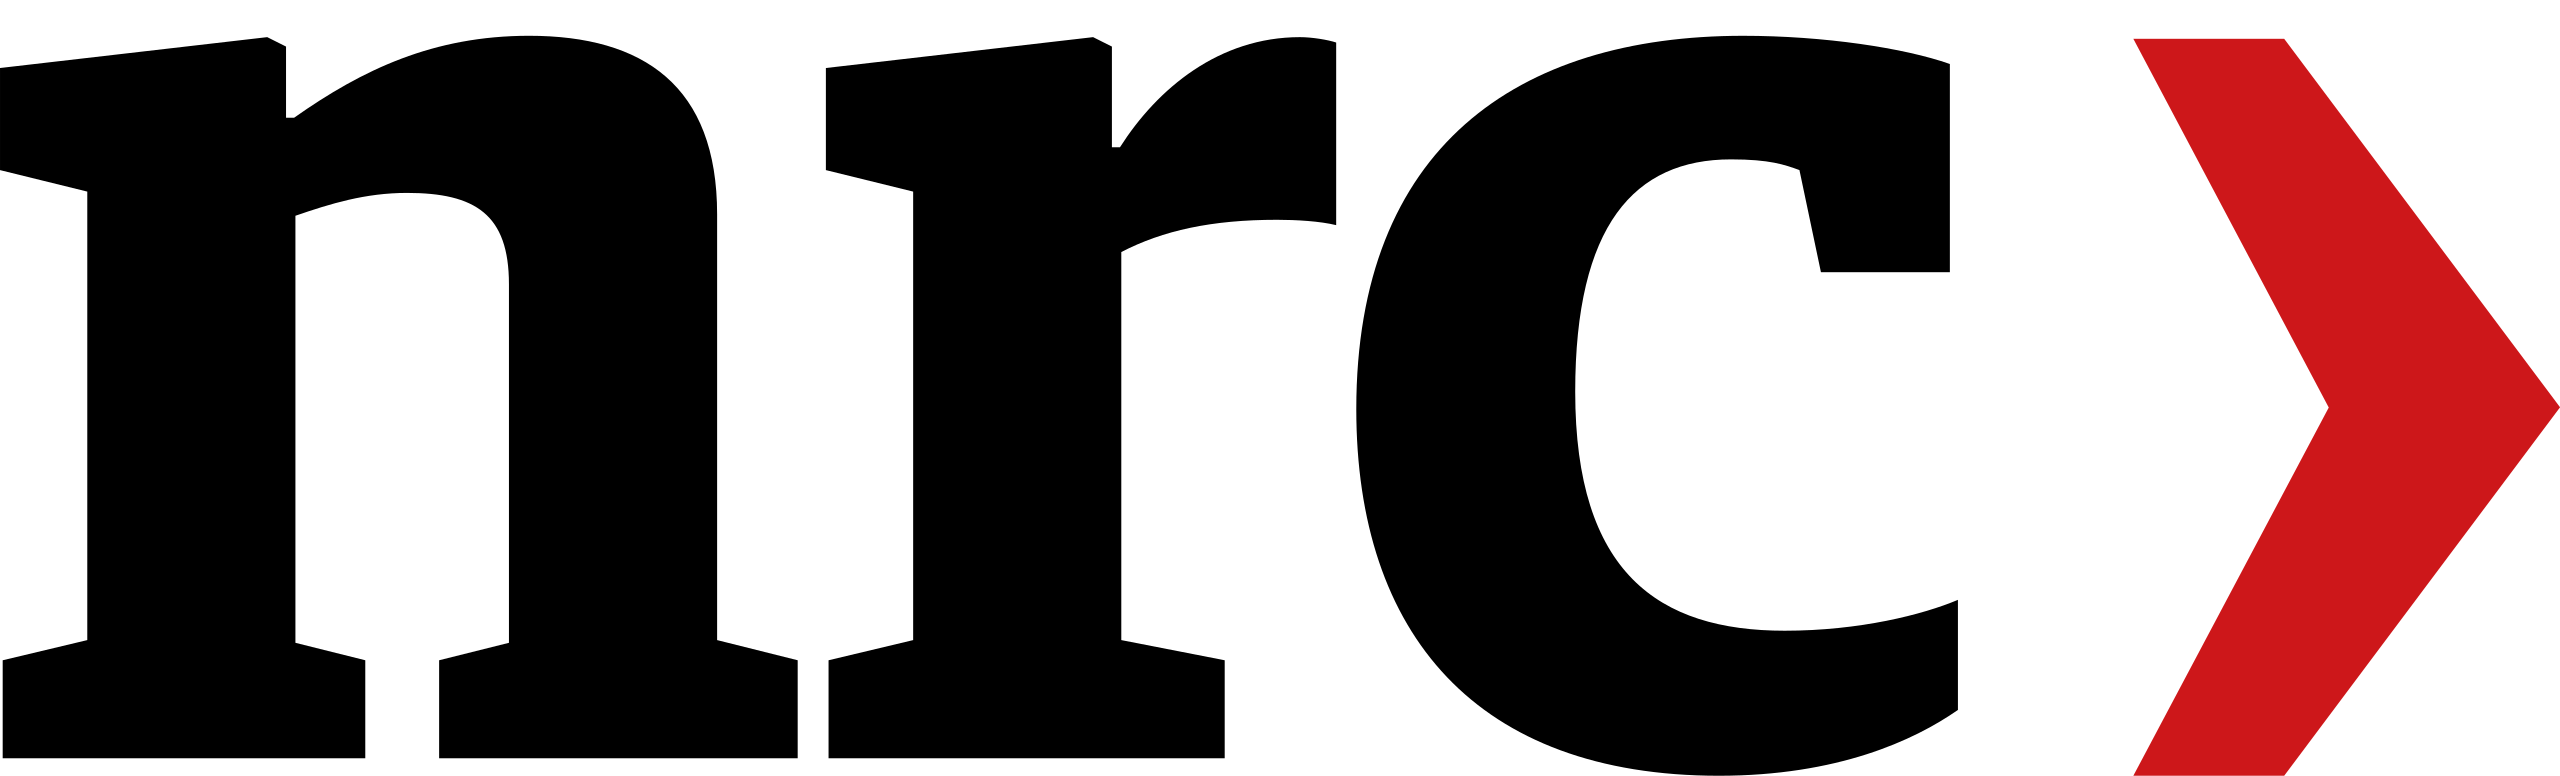 Bestand:NRC logo.svg - Wikipedia